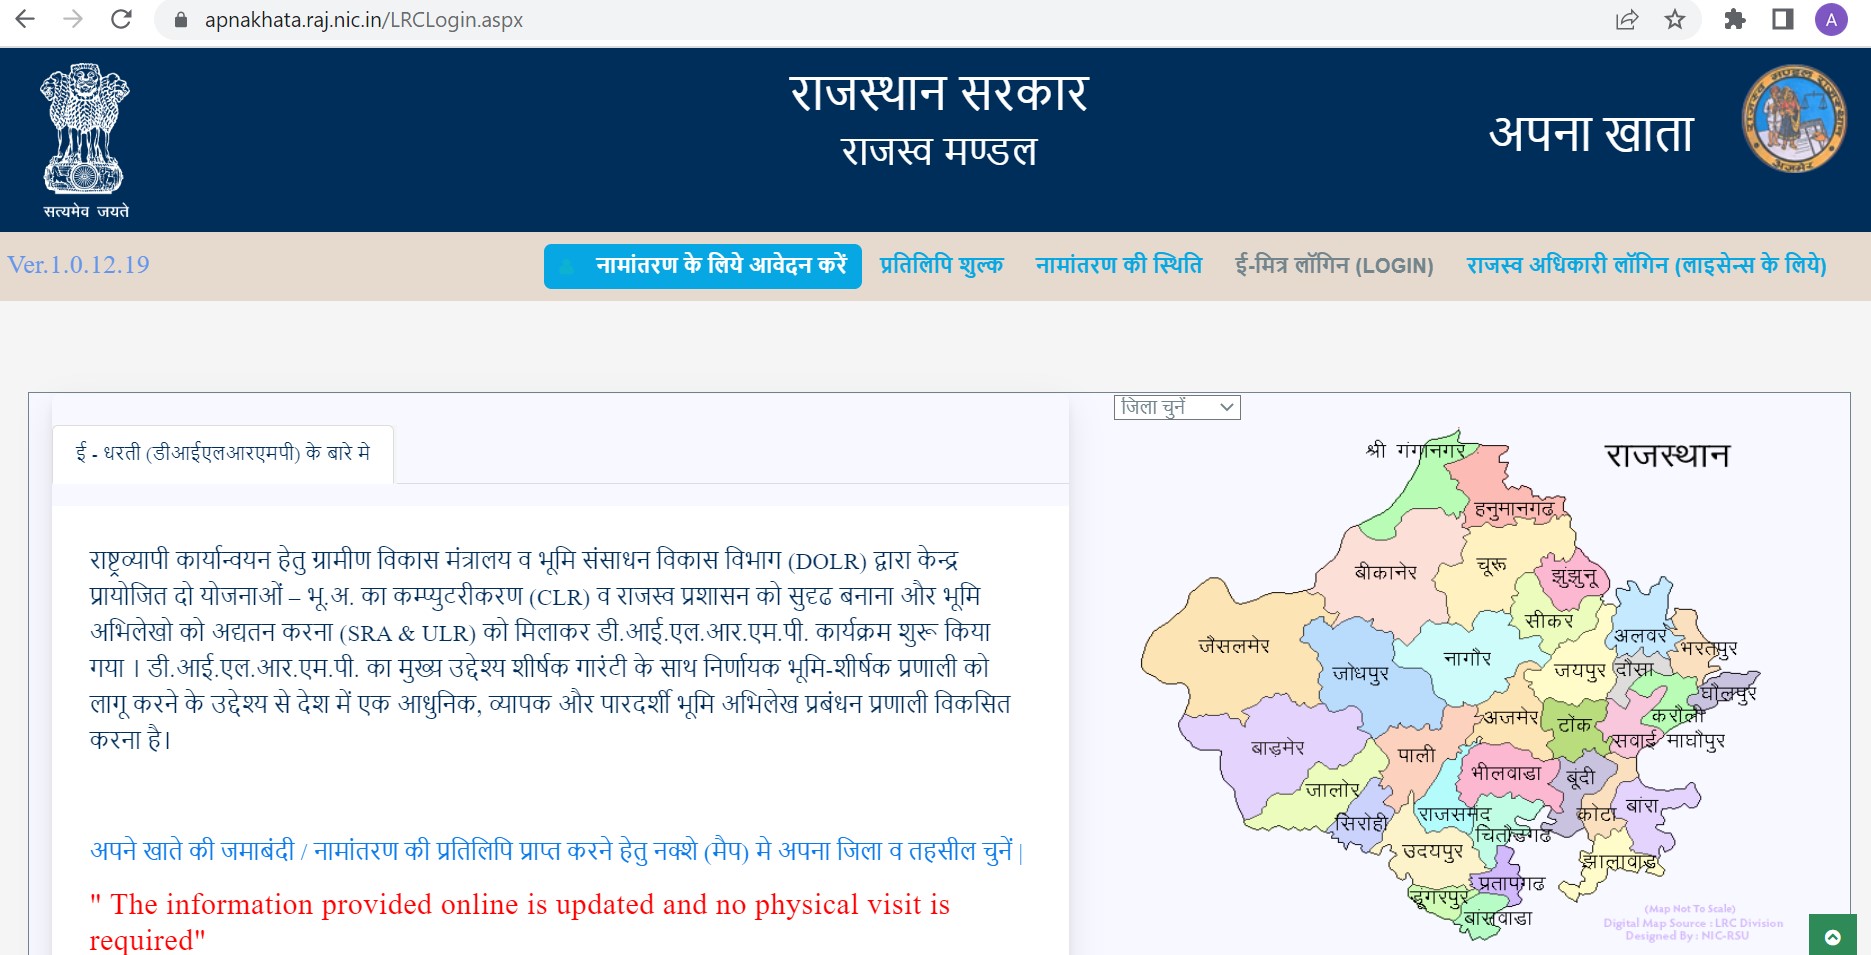 Apna Khata website